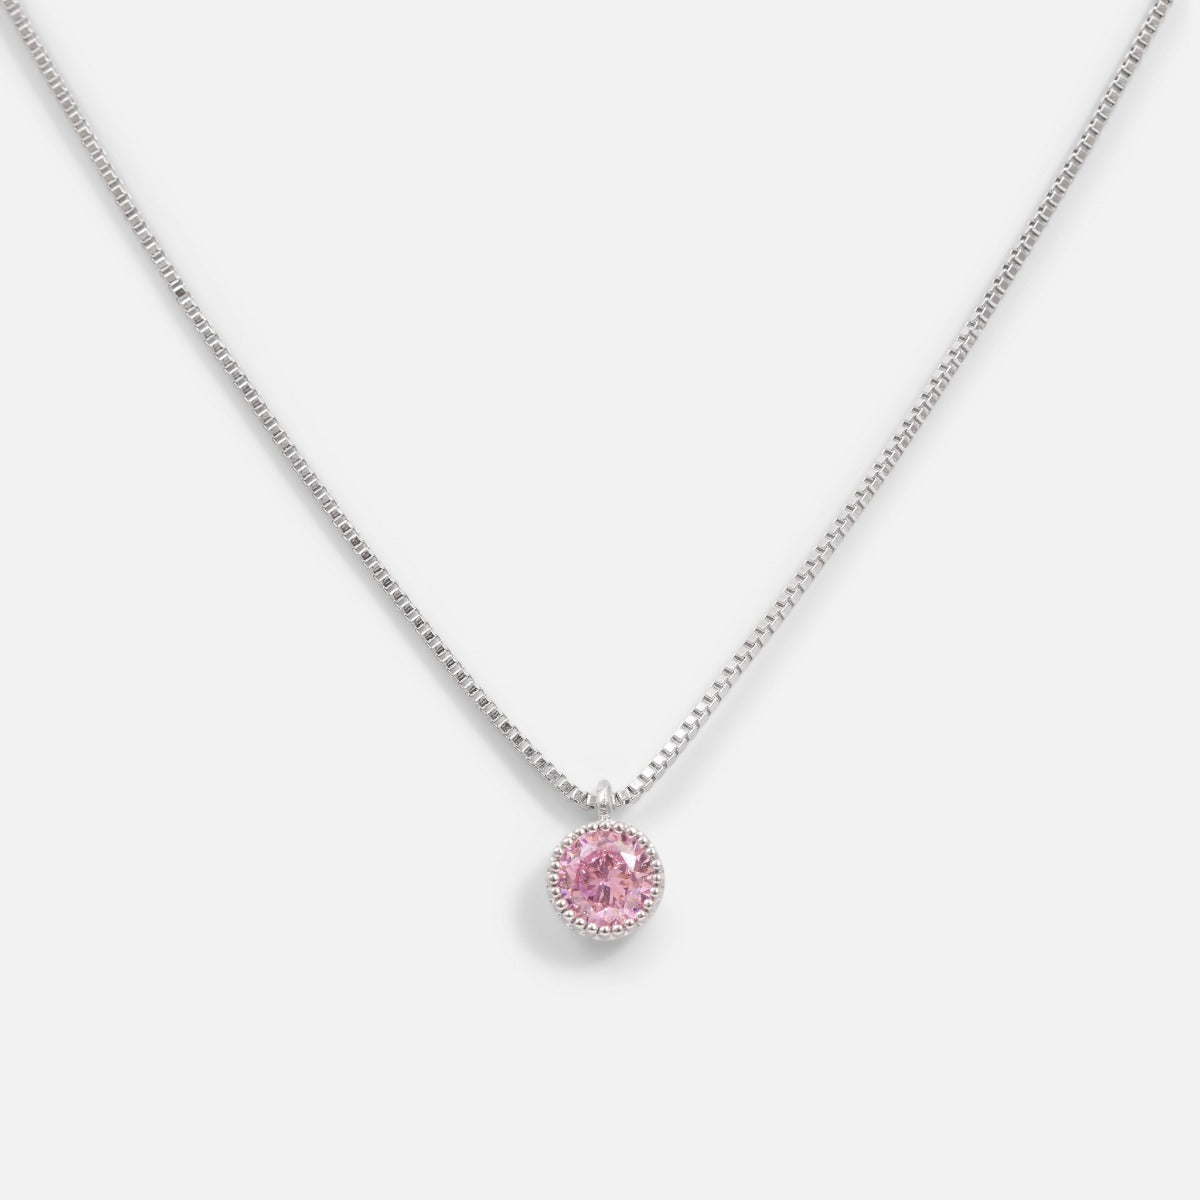 Silvered pendant birthstone " pink tourmaline stone "